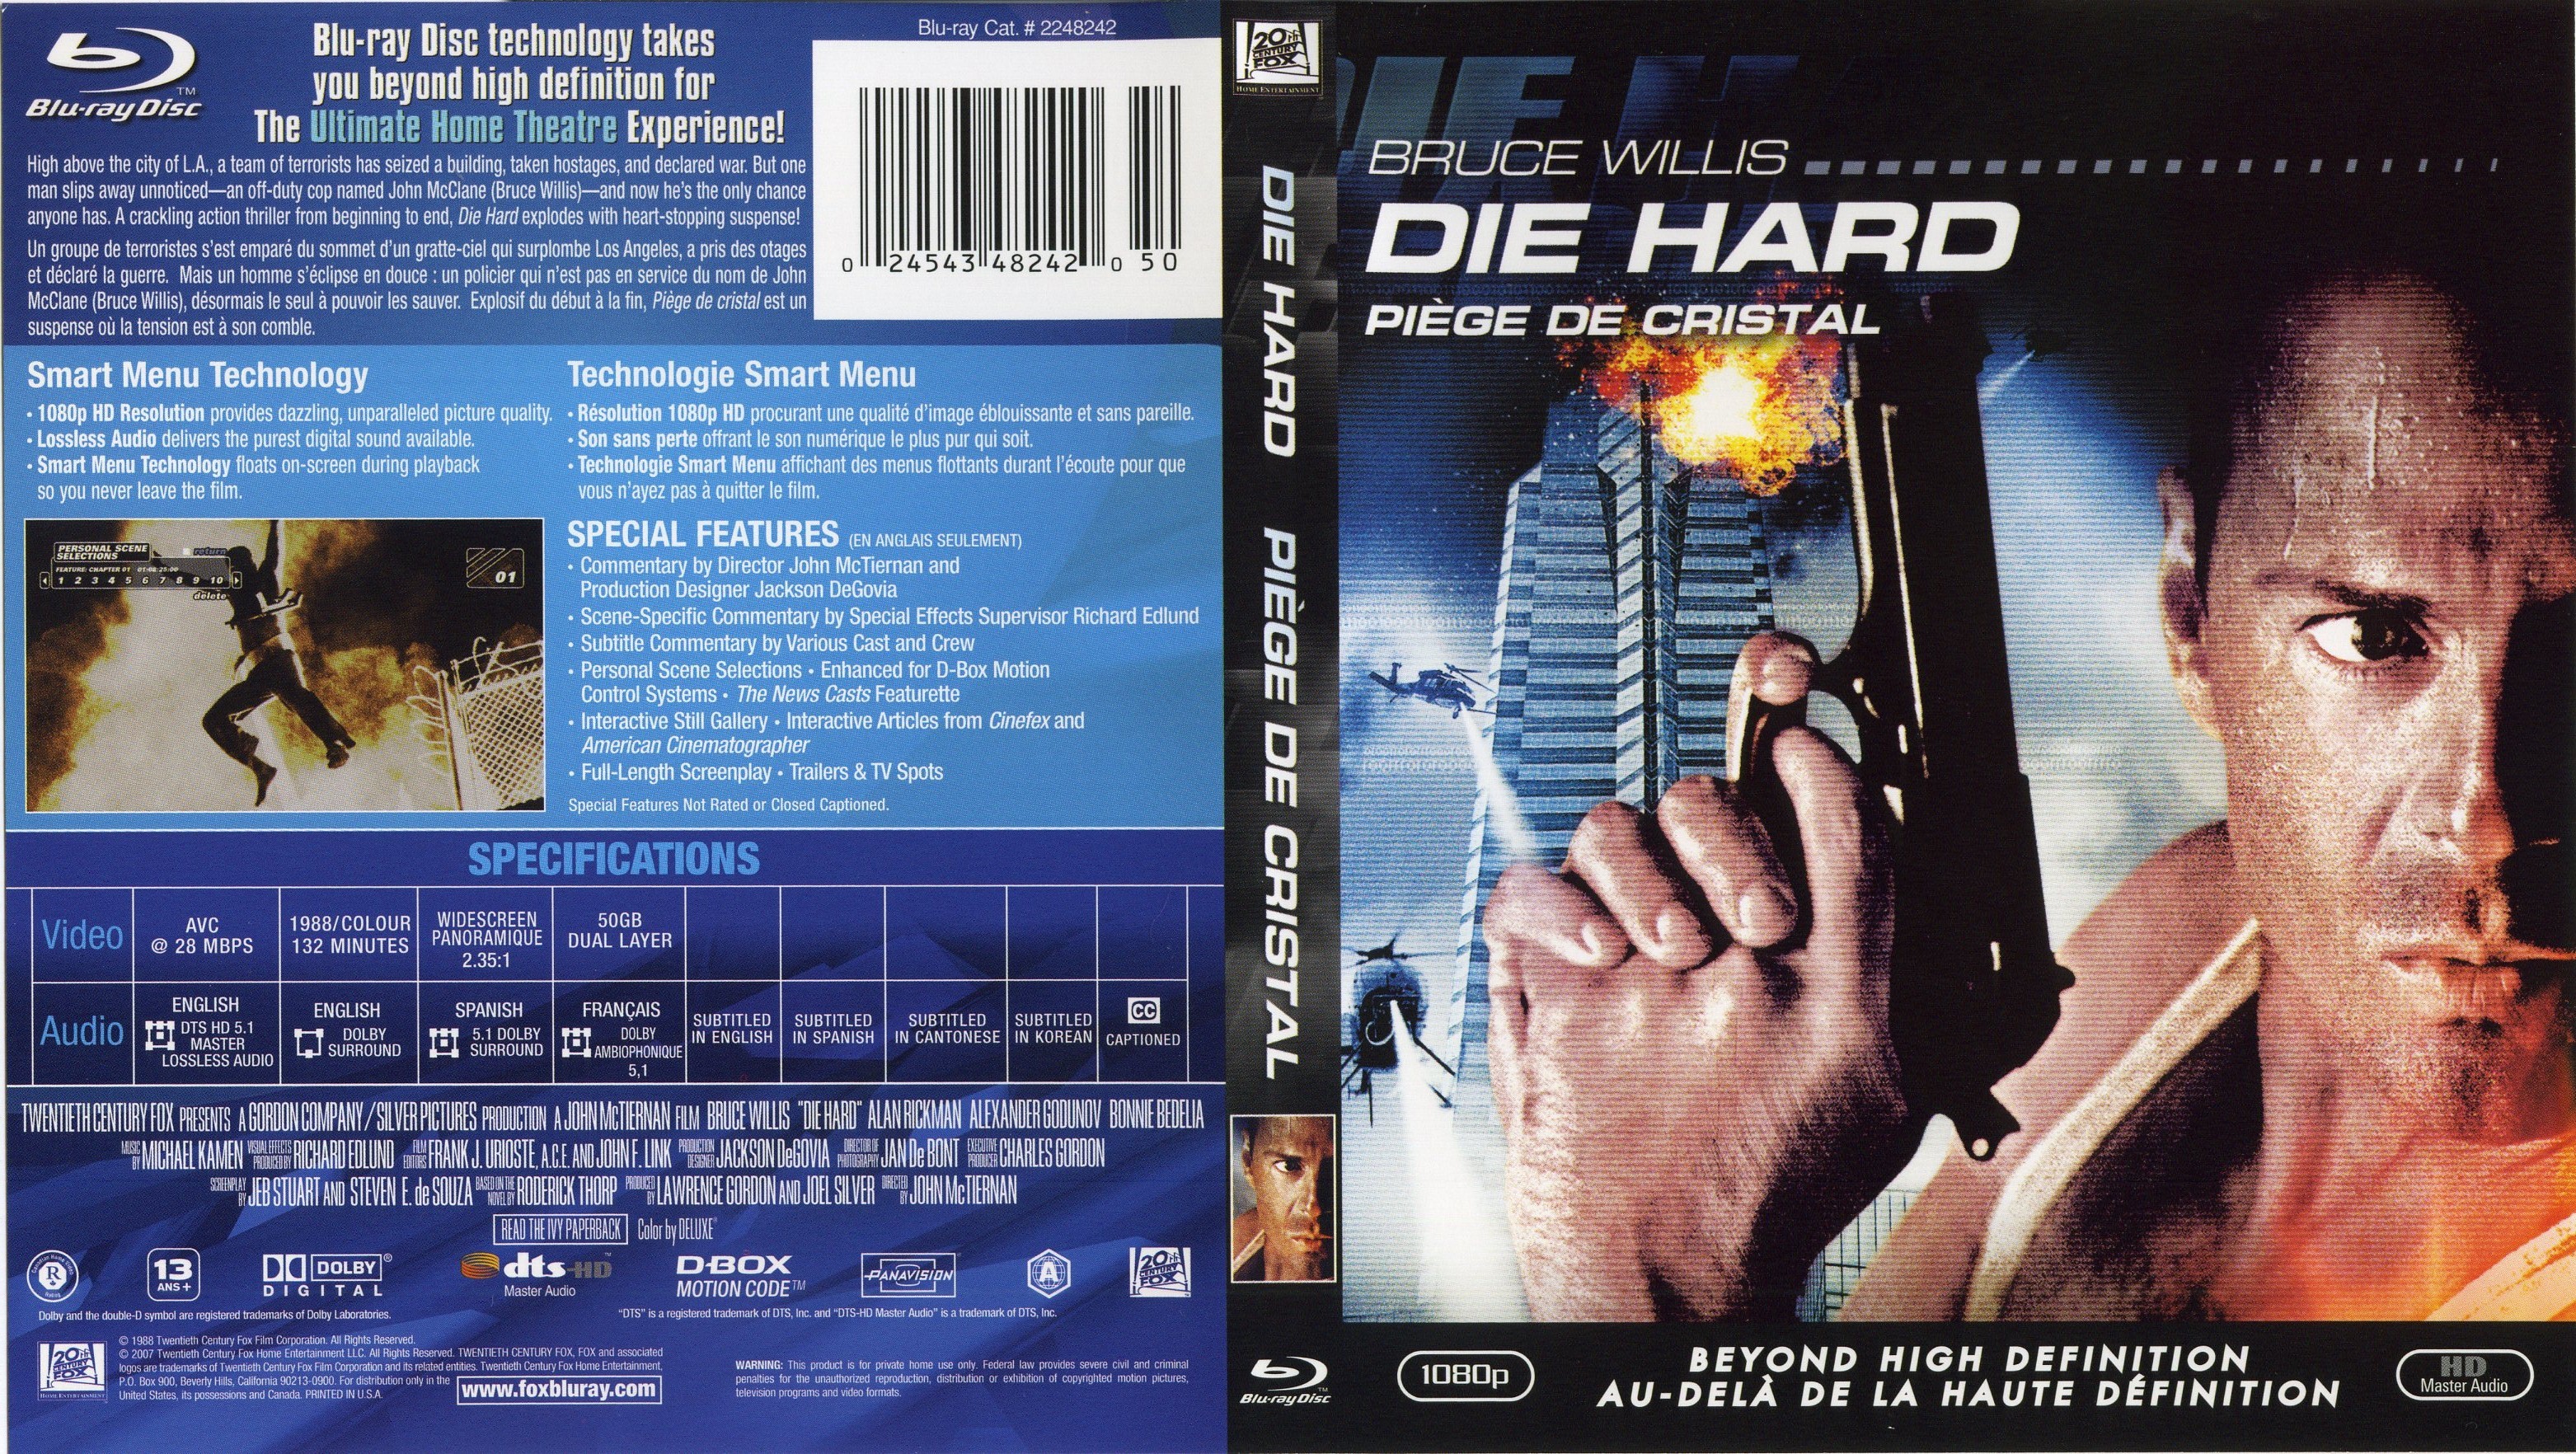 Jaquette DVD Die hard - Piege de cristal (Canadienne) (BLU-RAY)